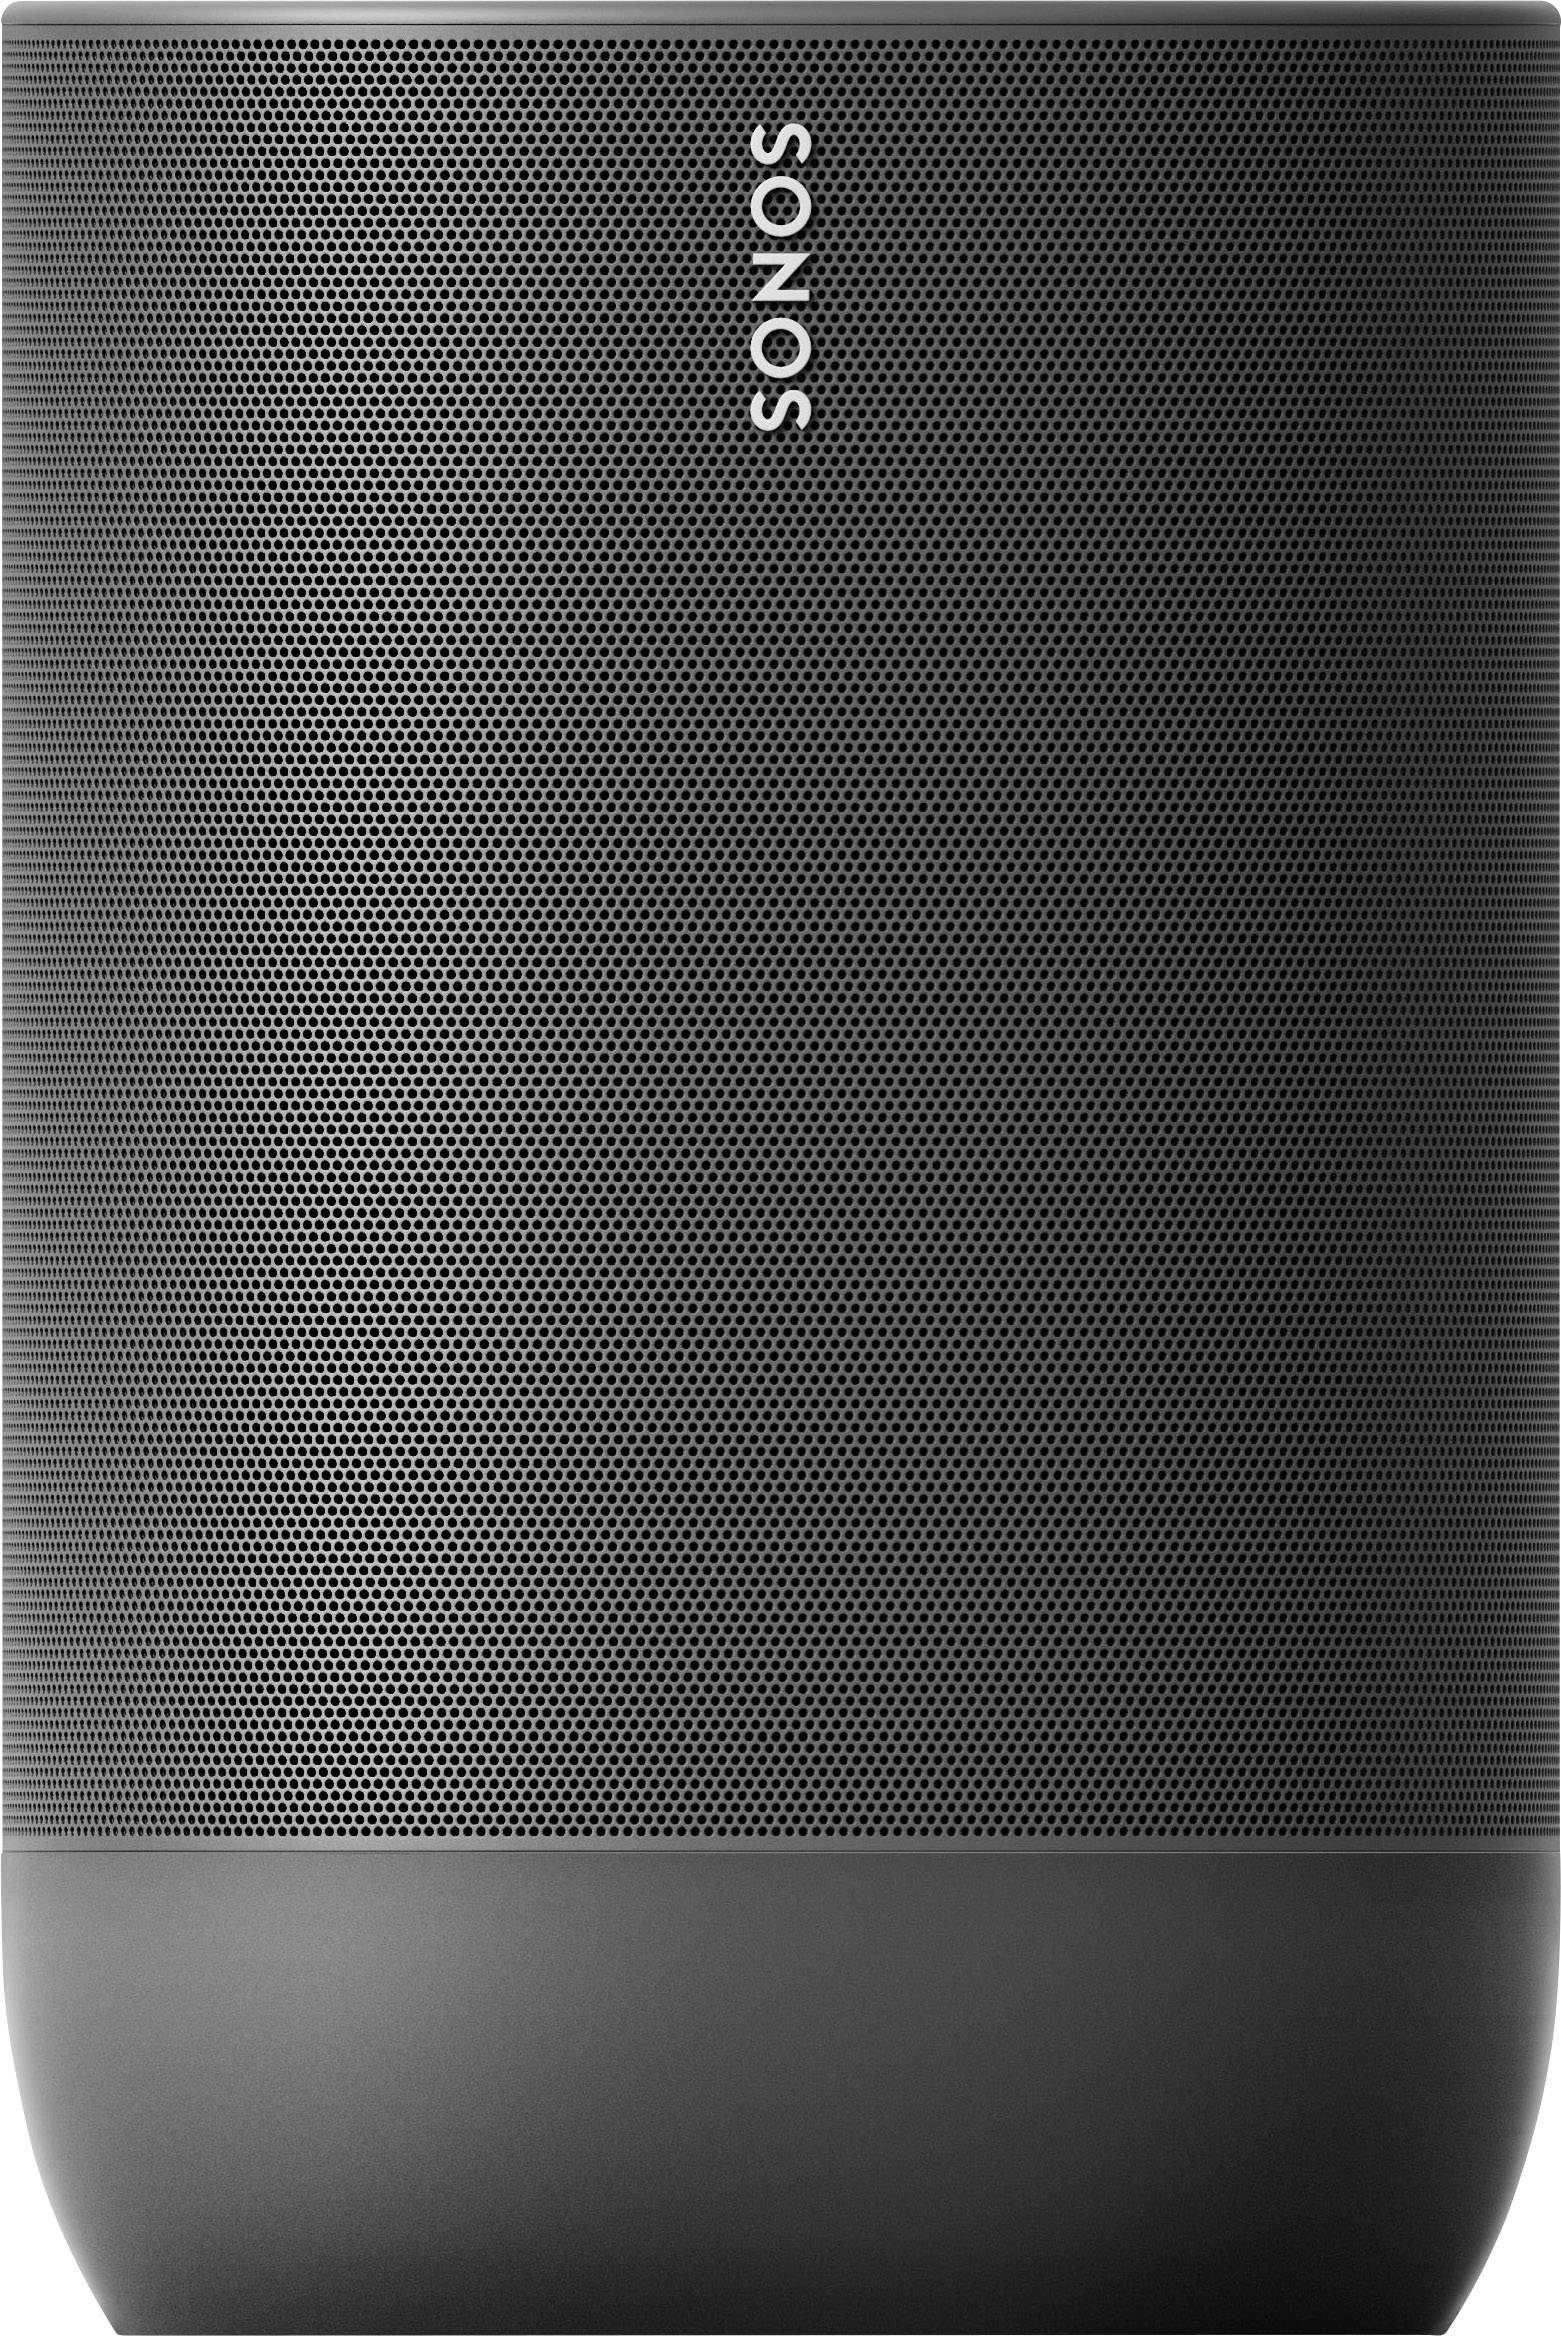 Bugt Opdagelse Fugtighed Sonos Move Multiroom højttaler Air-Play, Bluetooth, WiFi Amazon Alexa  direkte integreret , Google Assistant kan integre | Conradelektronik.dk